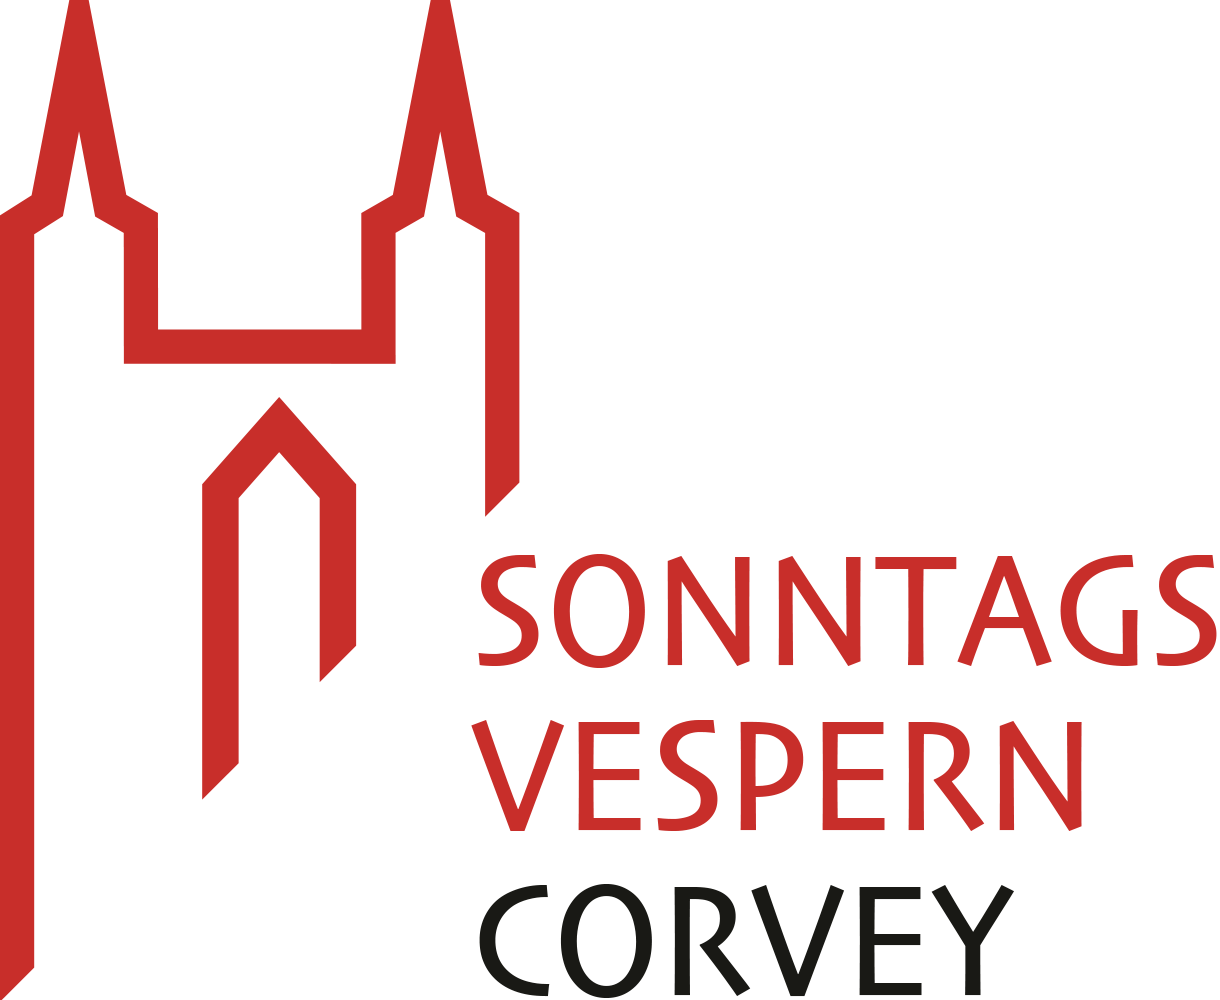 sonntagsvespern-corvey-logo